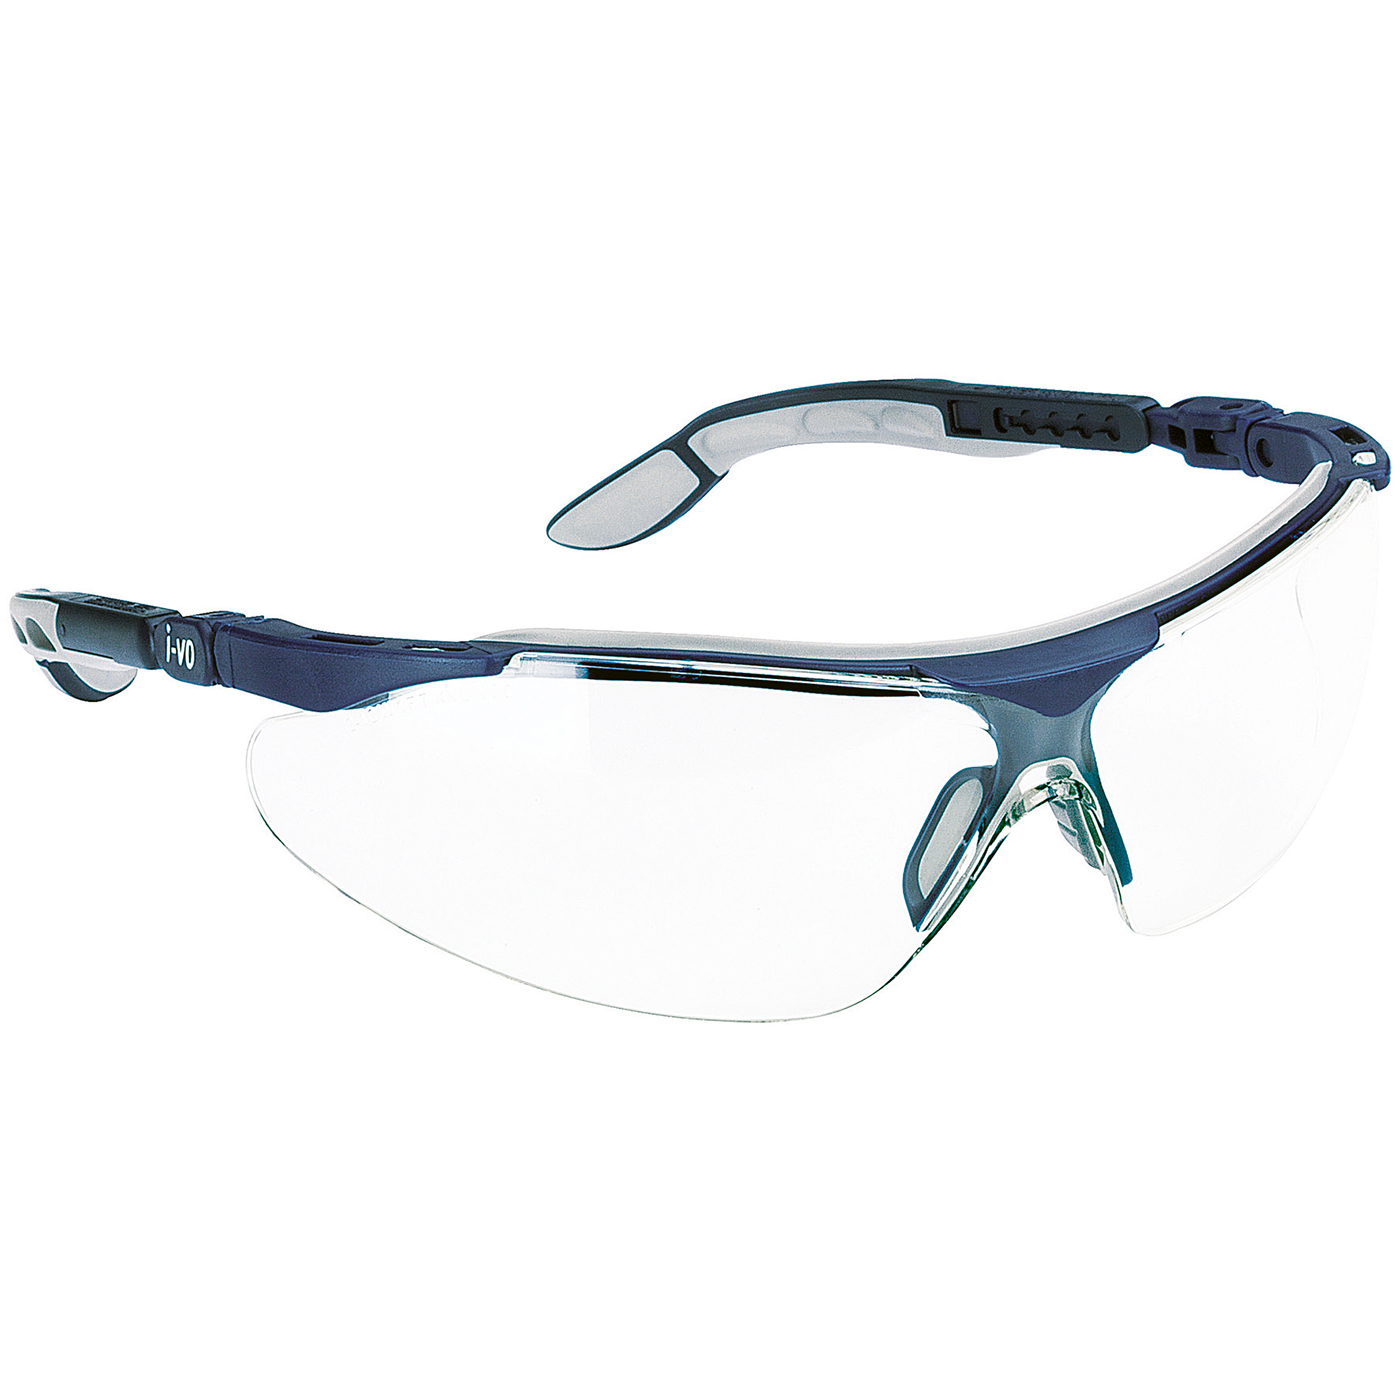 iSpec Comfort Fit Protective Goggles, Transparent, Blue/Grey - 1 piece